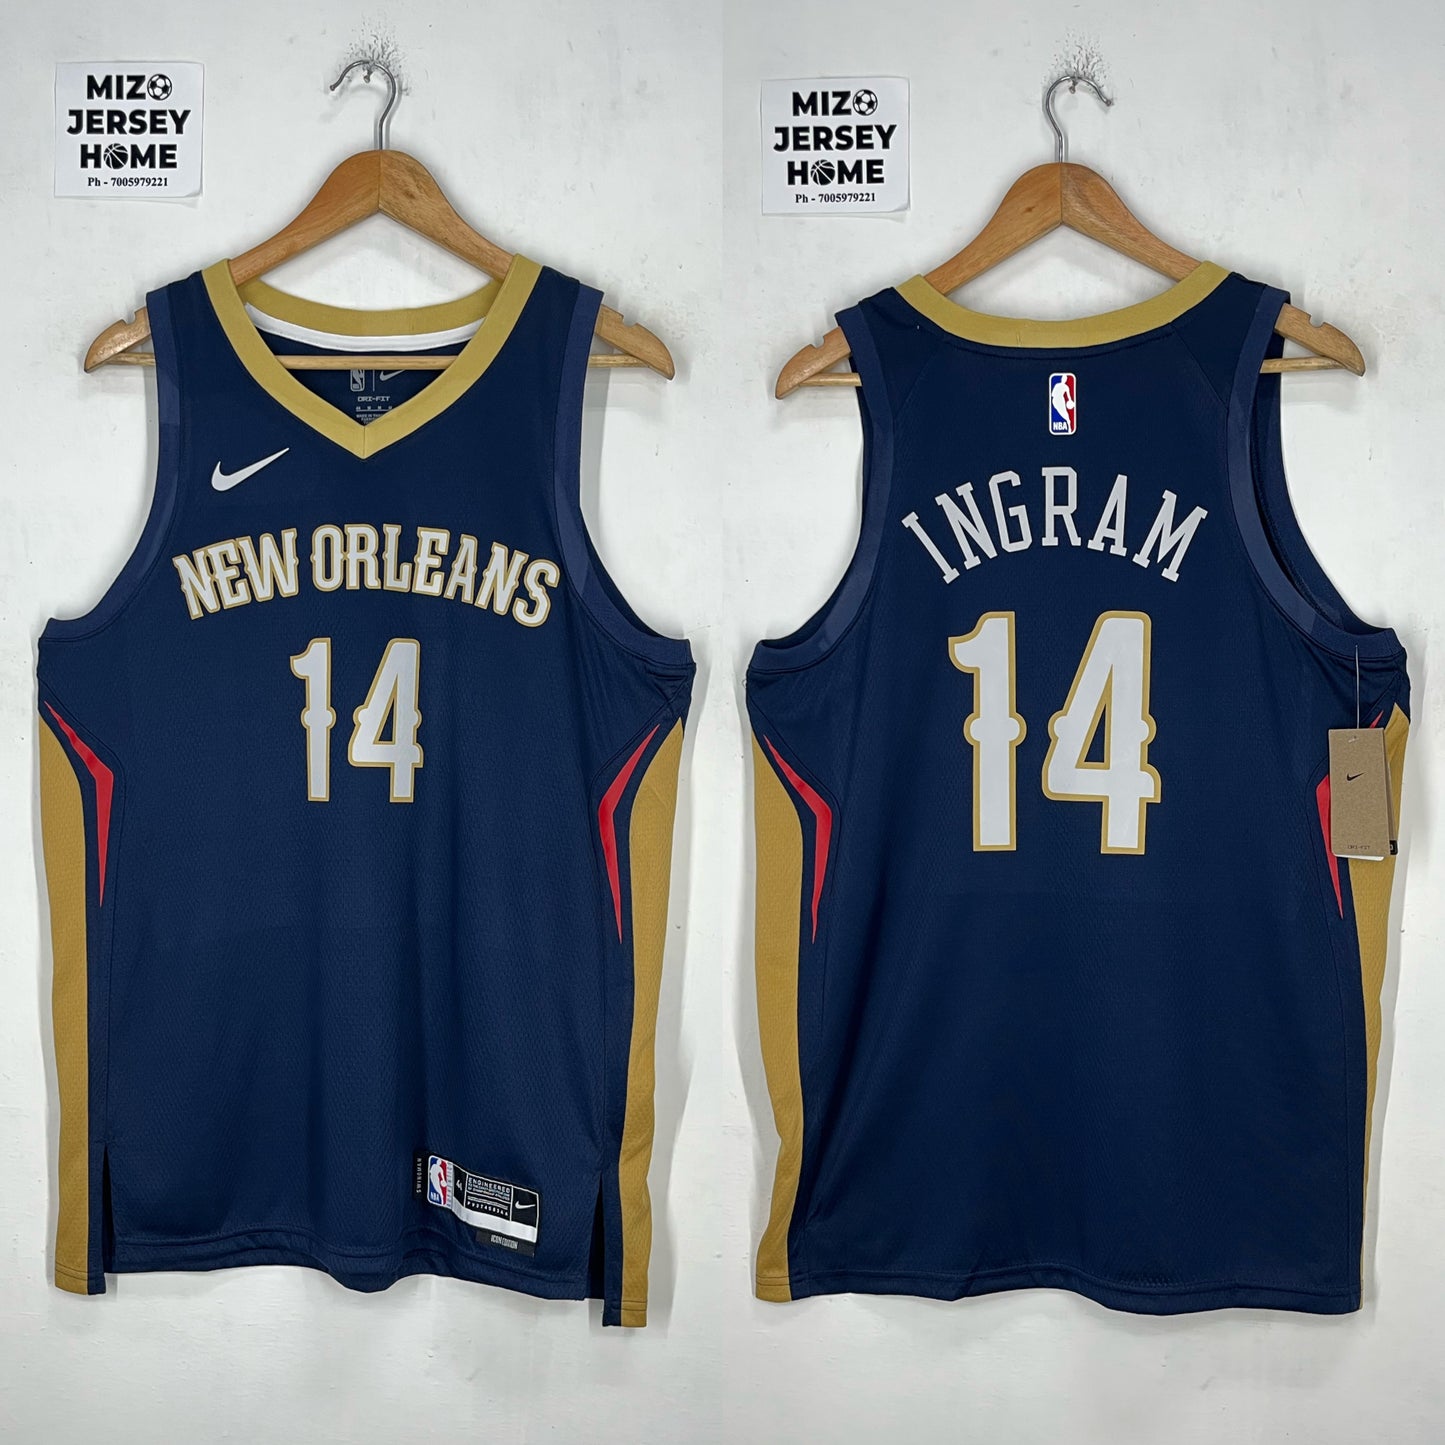 INGRAM 14 Dark Blue New Orleans Pelicans NBA Jersey